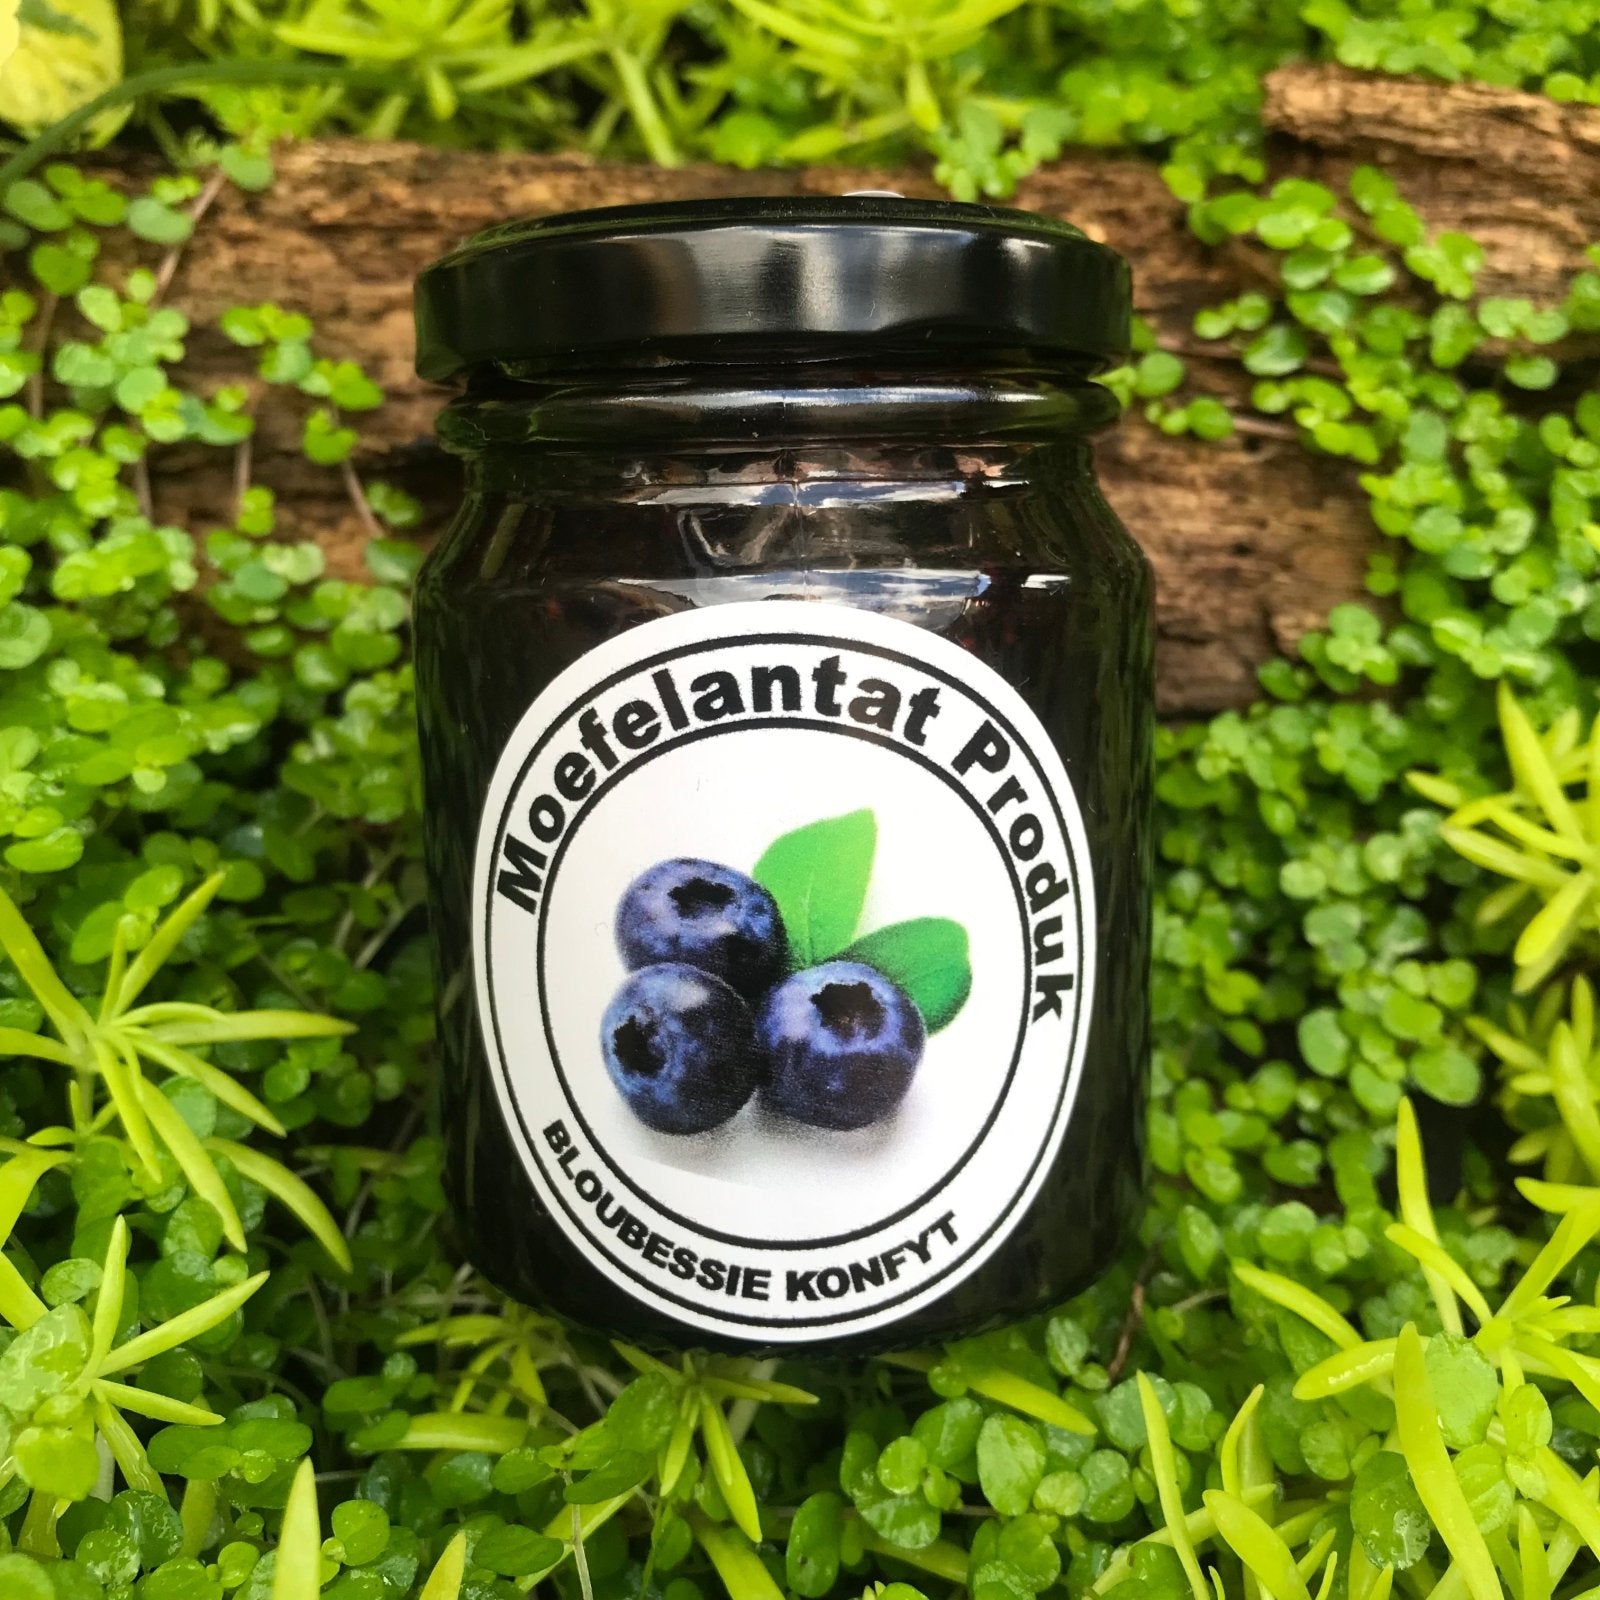 Moefelantat Blueberry Jam (125g) - The Deli